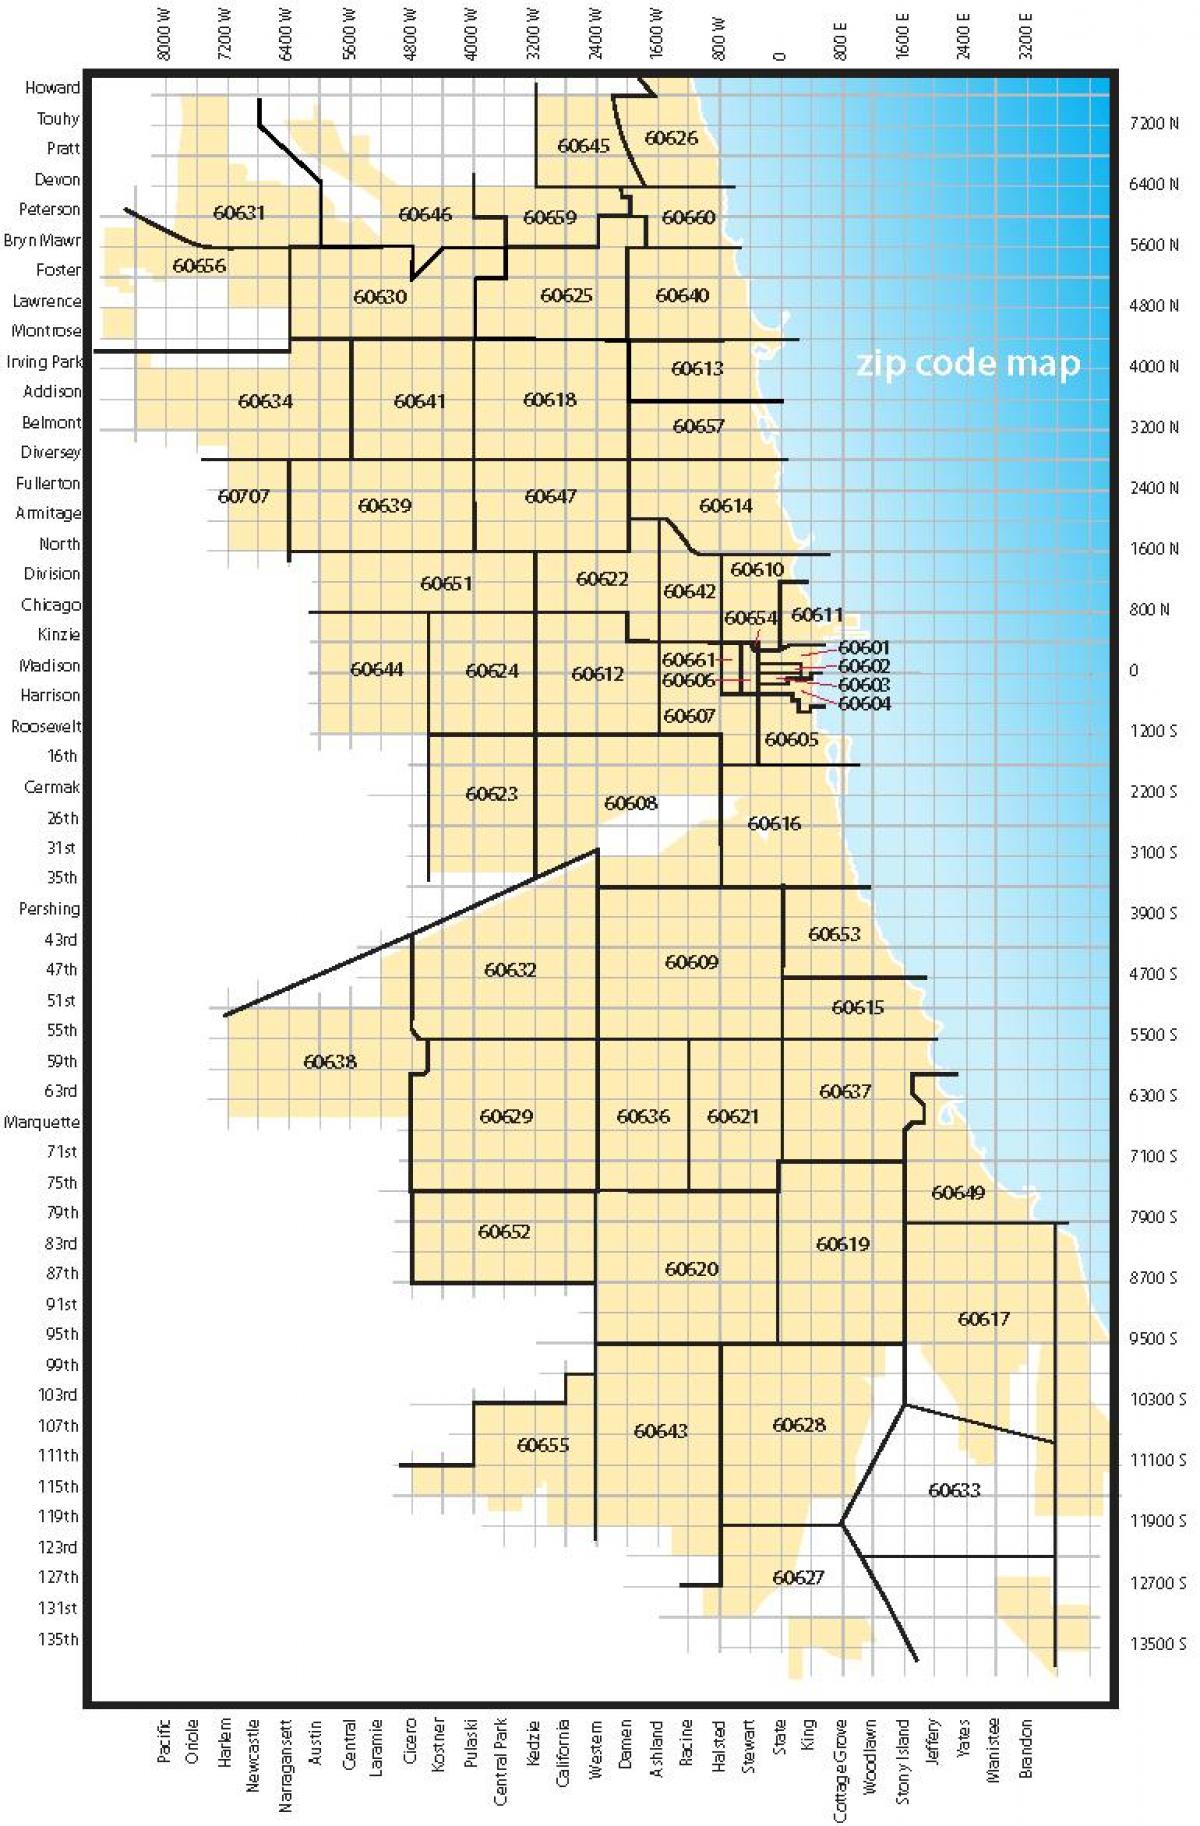 map of Chicago zip codes